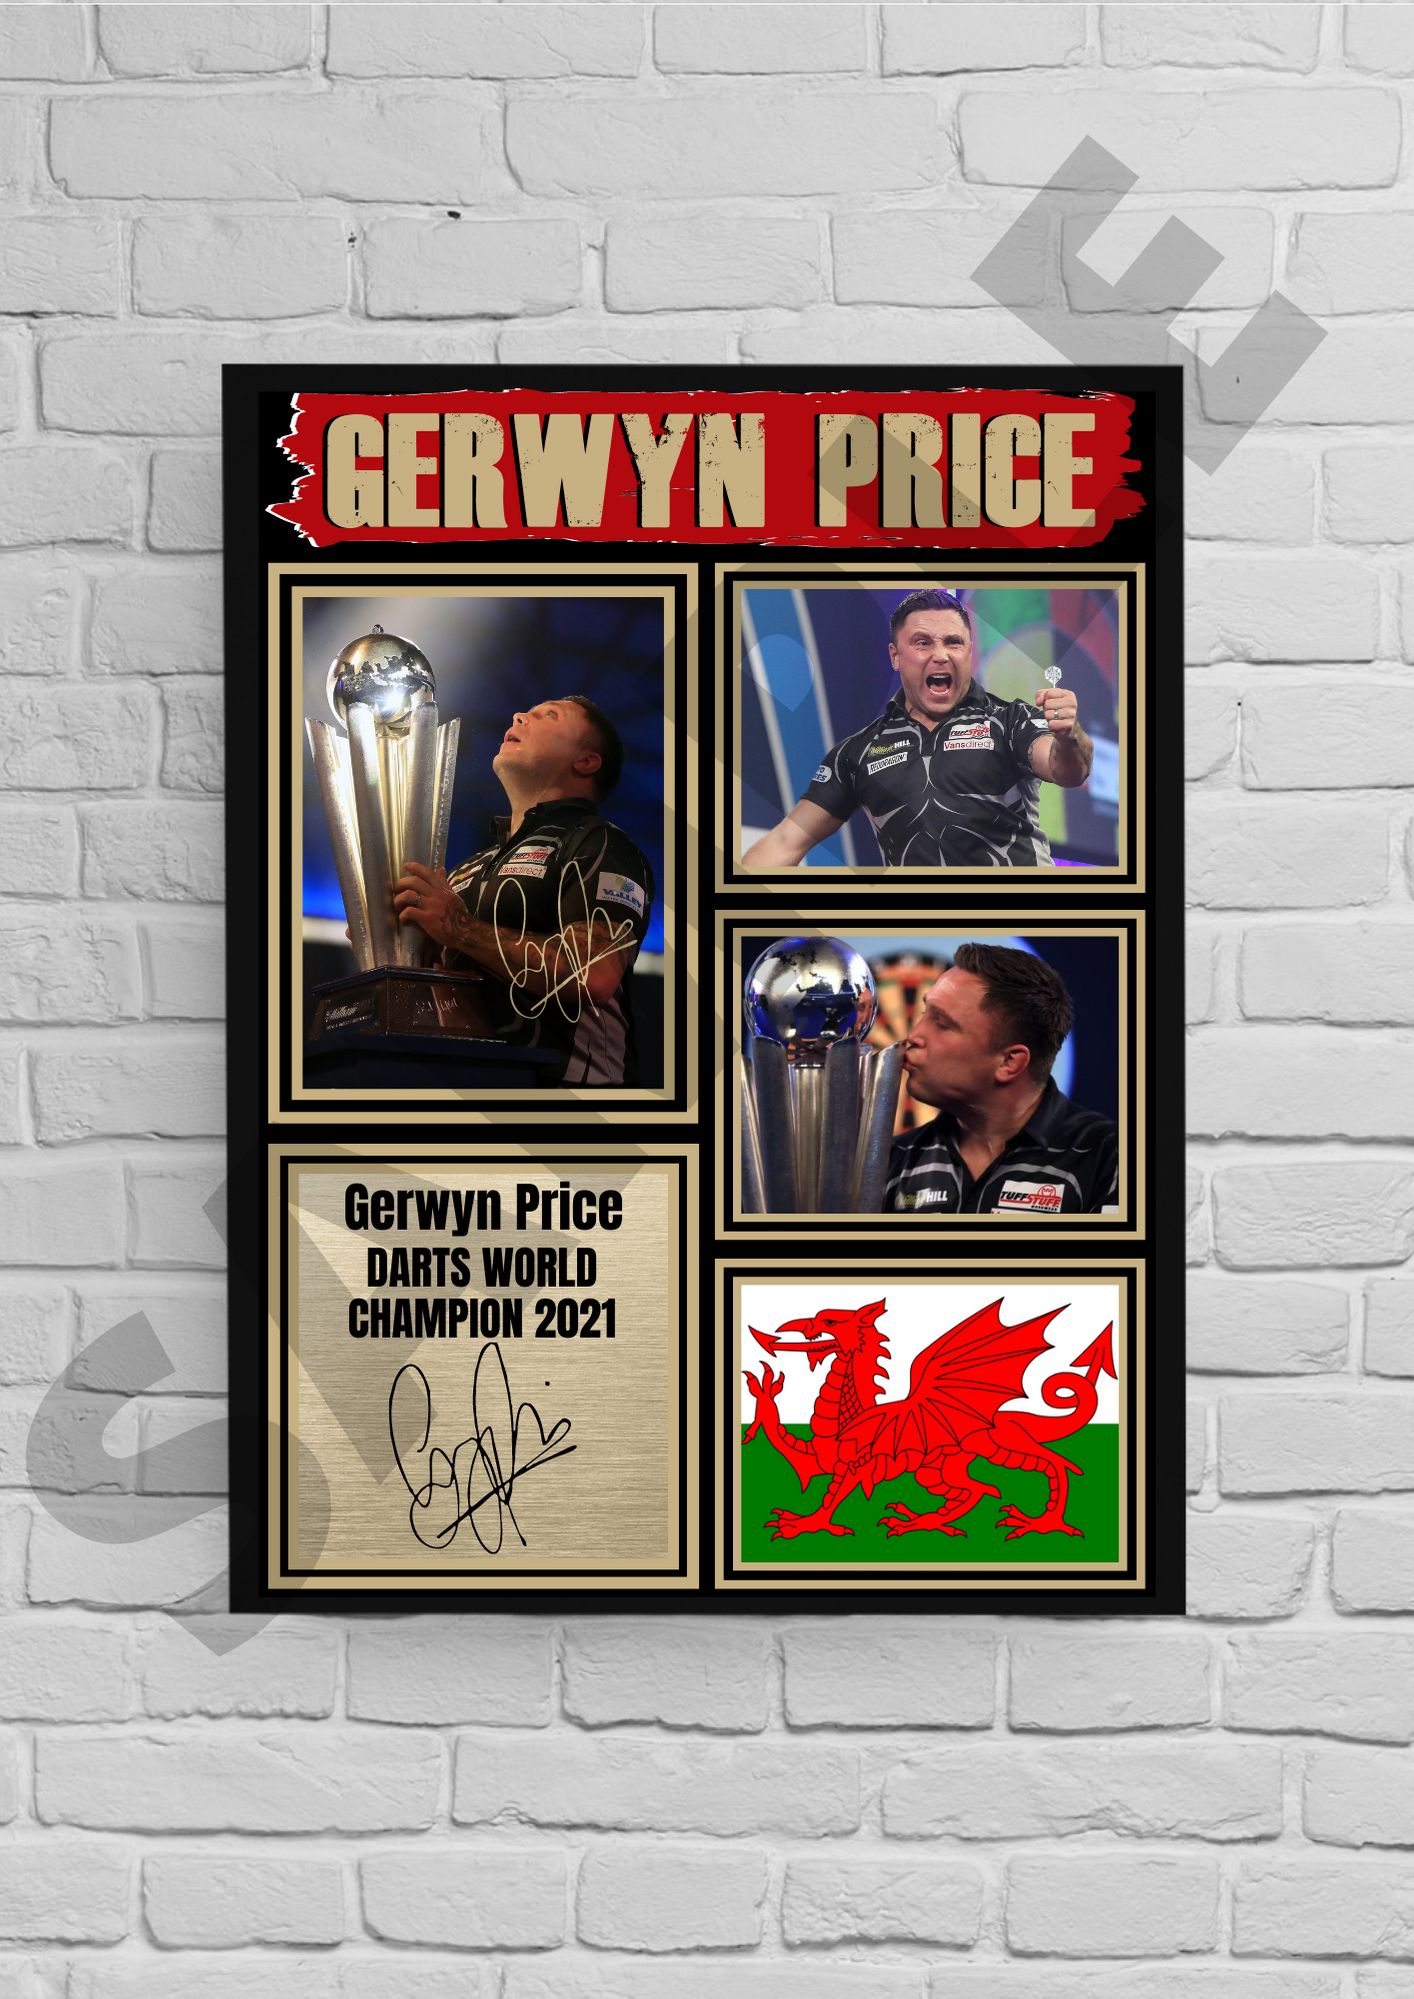 Gerwyn Price (Darts) Collectable/Memorabilia #1 - Signed print